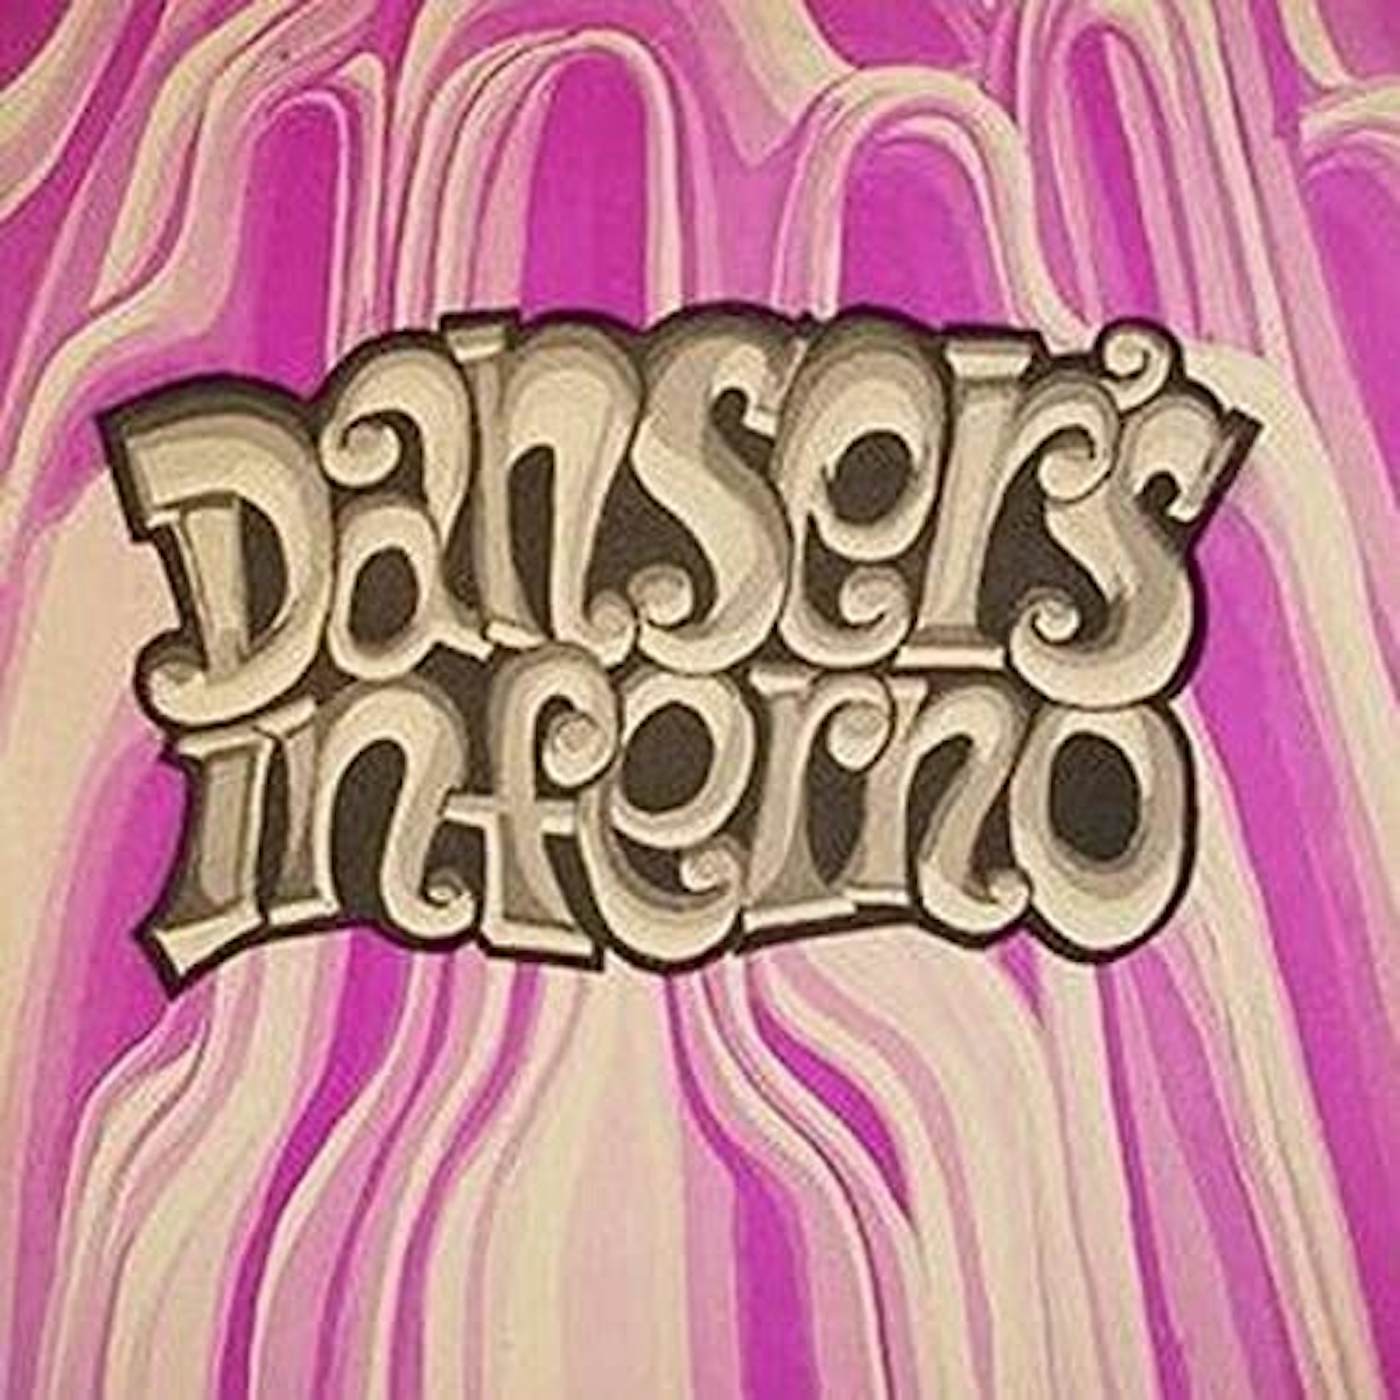 Danser's Inferno CREATION ONE CD